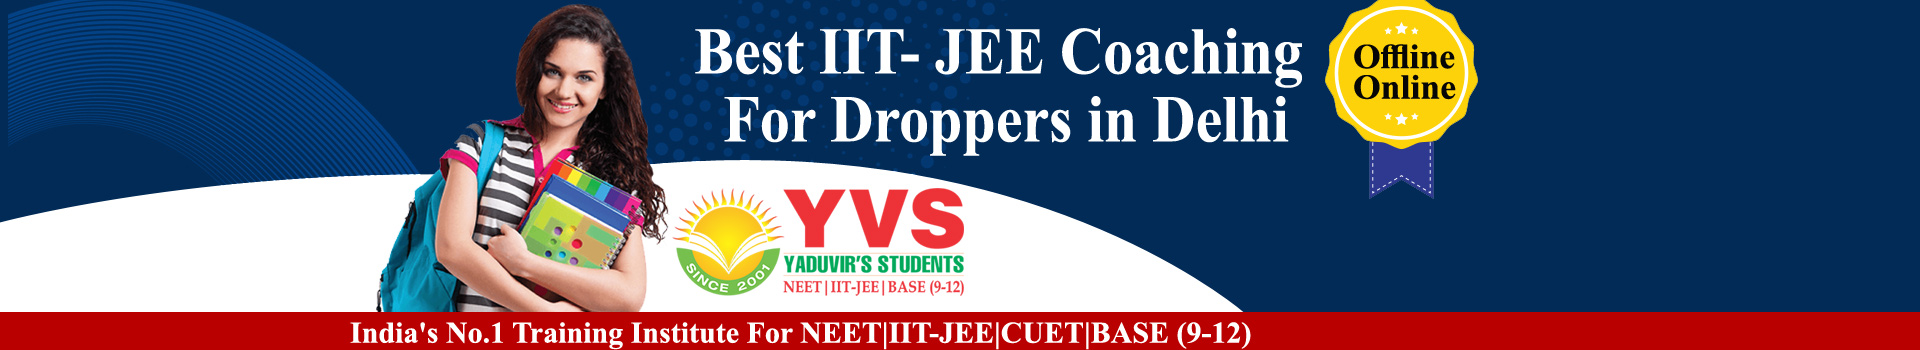 Best IIT JEE Coaching for Droppers in Delhi